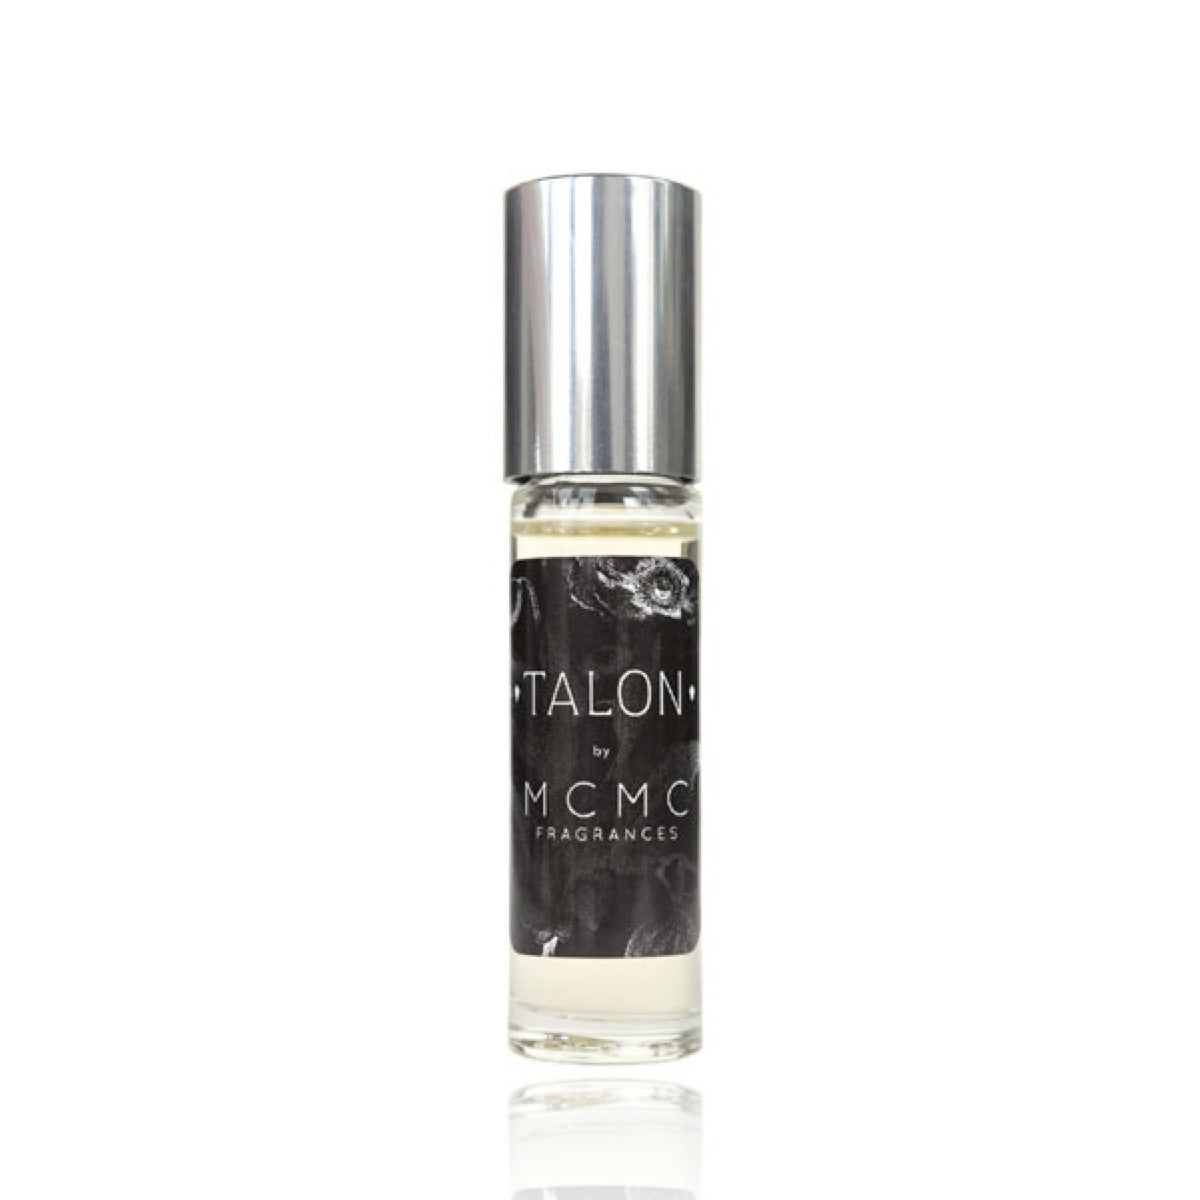 TALON perfume oil